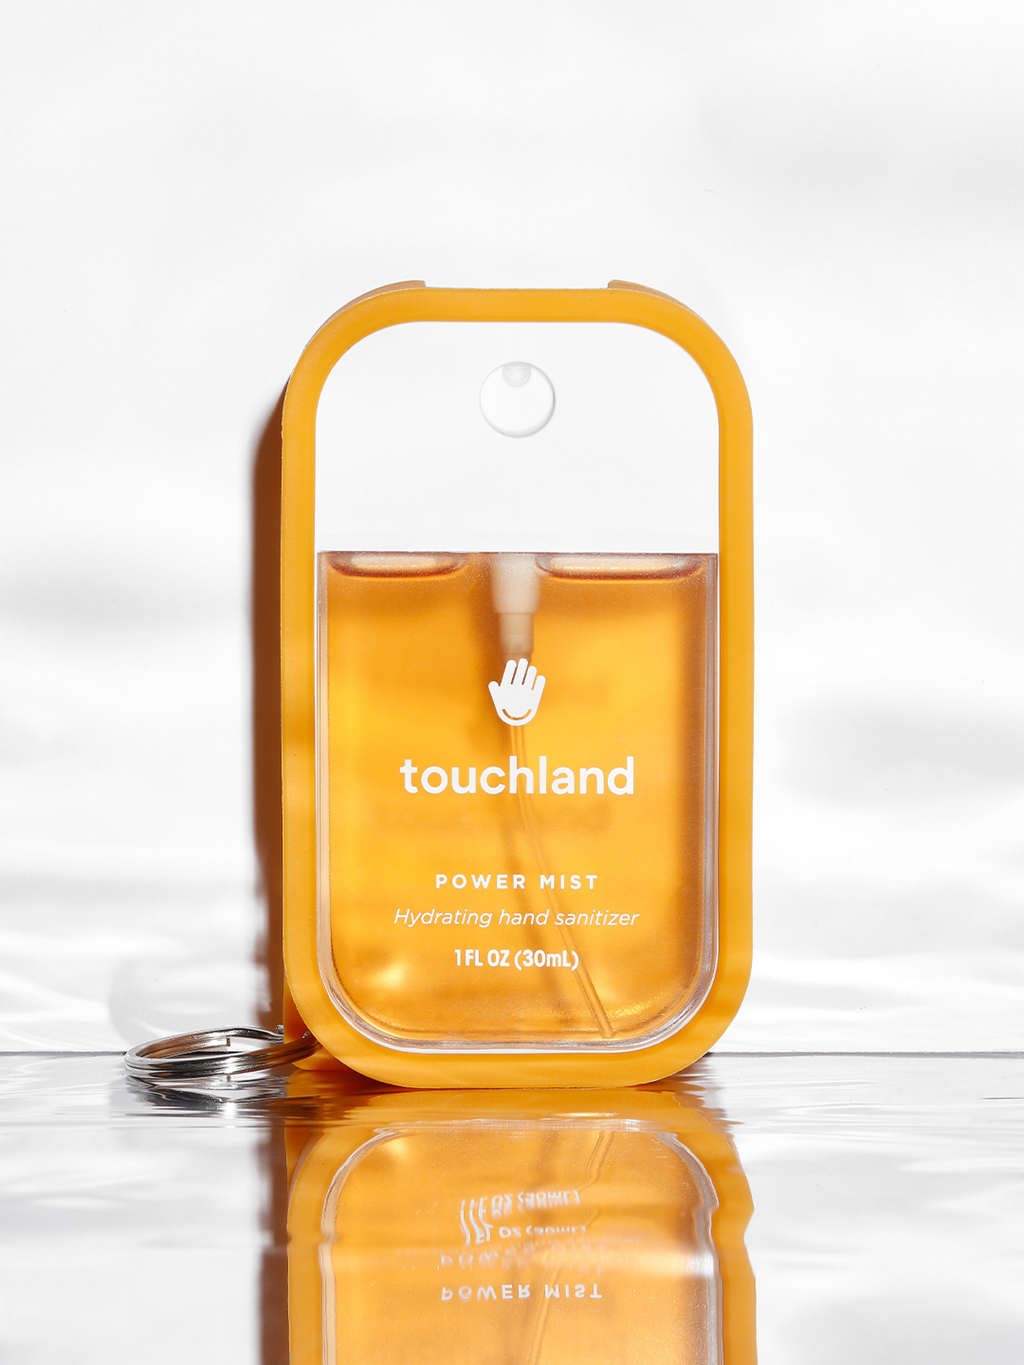 Touchland orange case with orange power mist inside on white background#skip